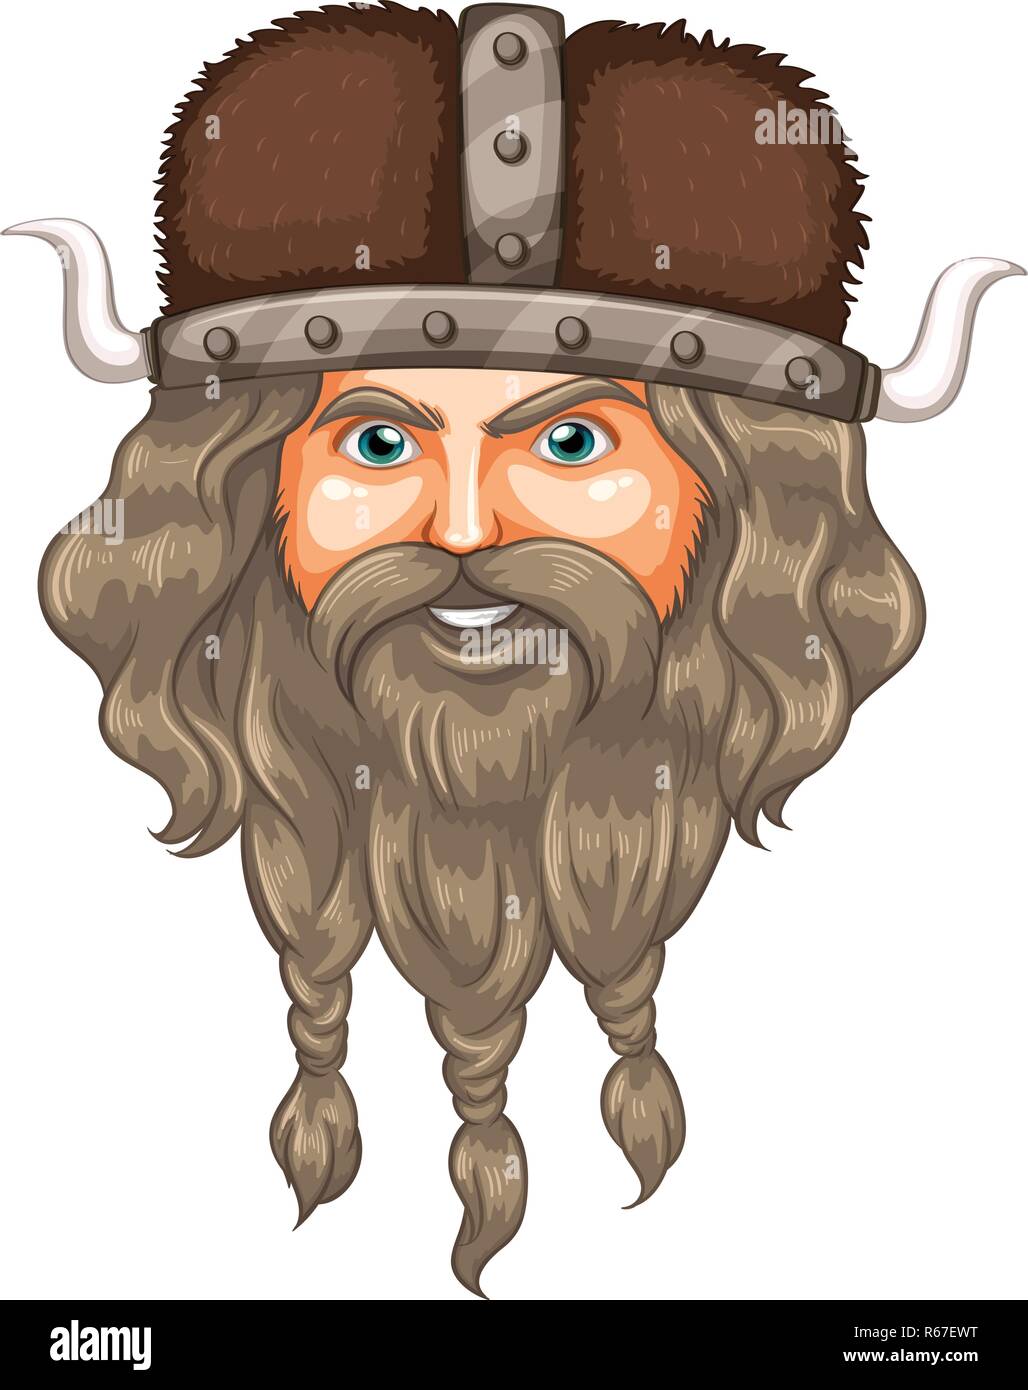 A head of viking illustration Stock Vector